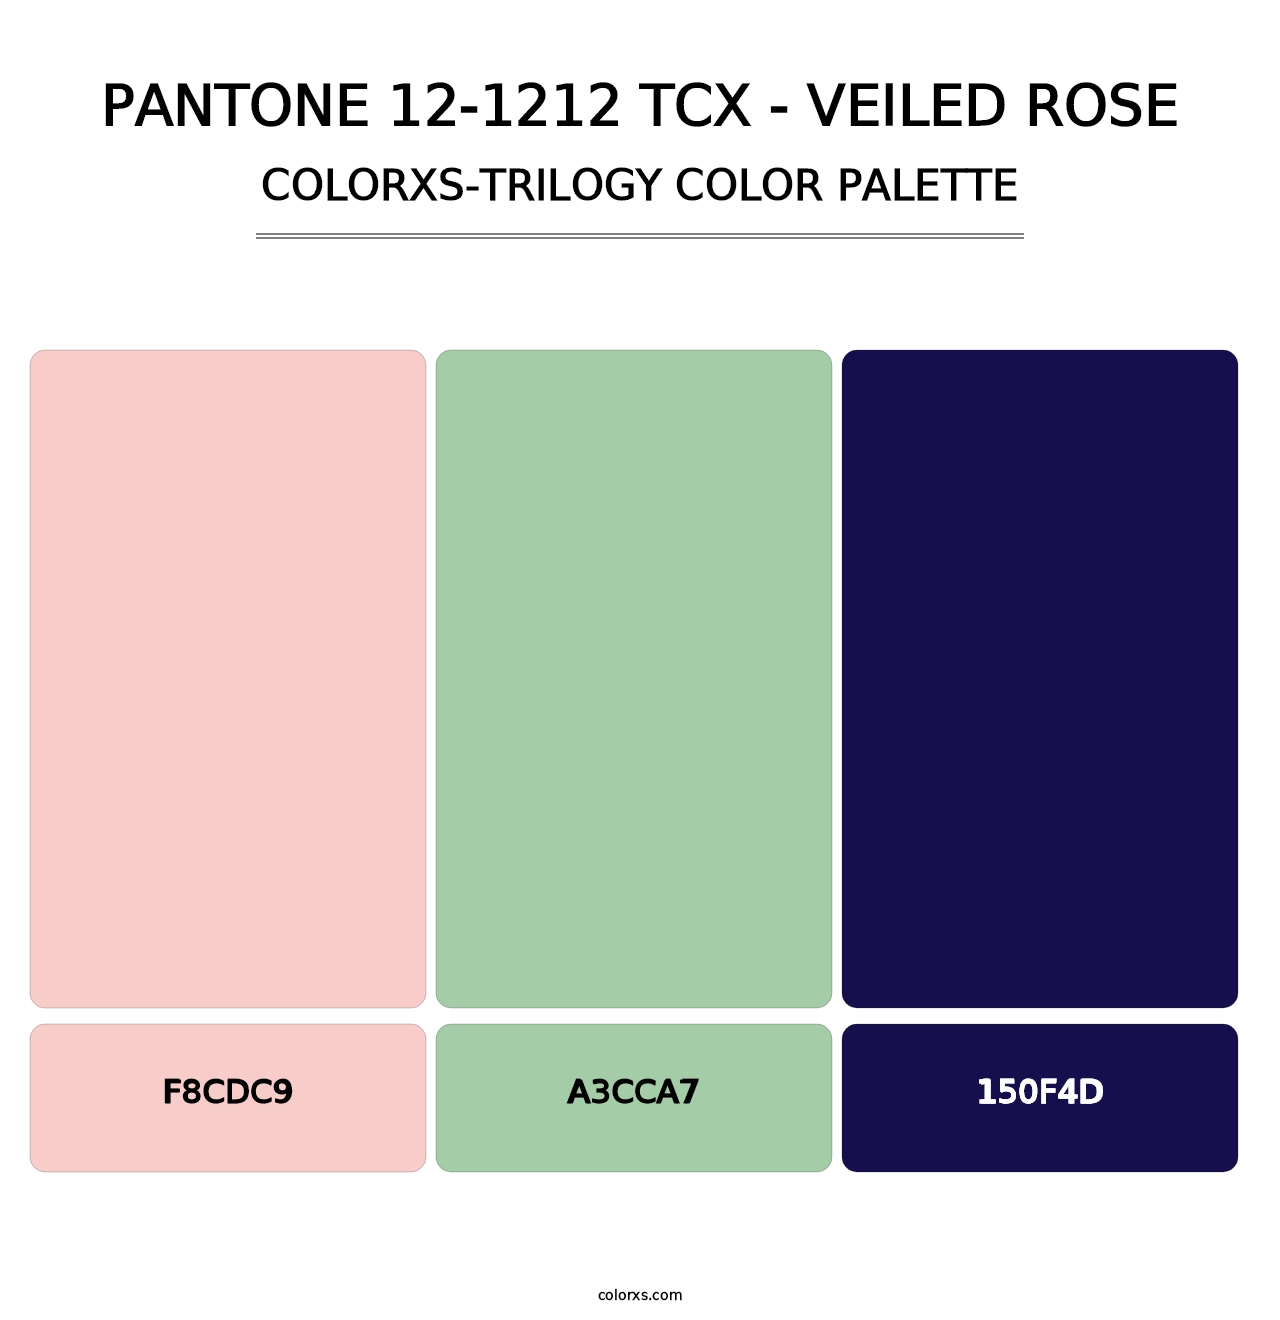 PANTONE 12-1212 TCX - Veiled Rose - Colorxs Trilogy Palette